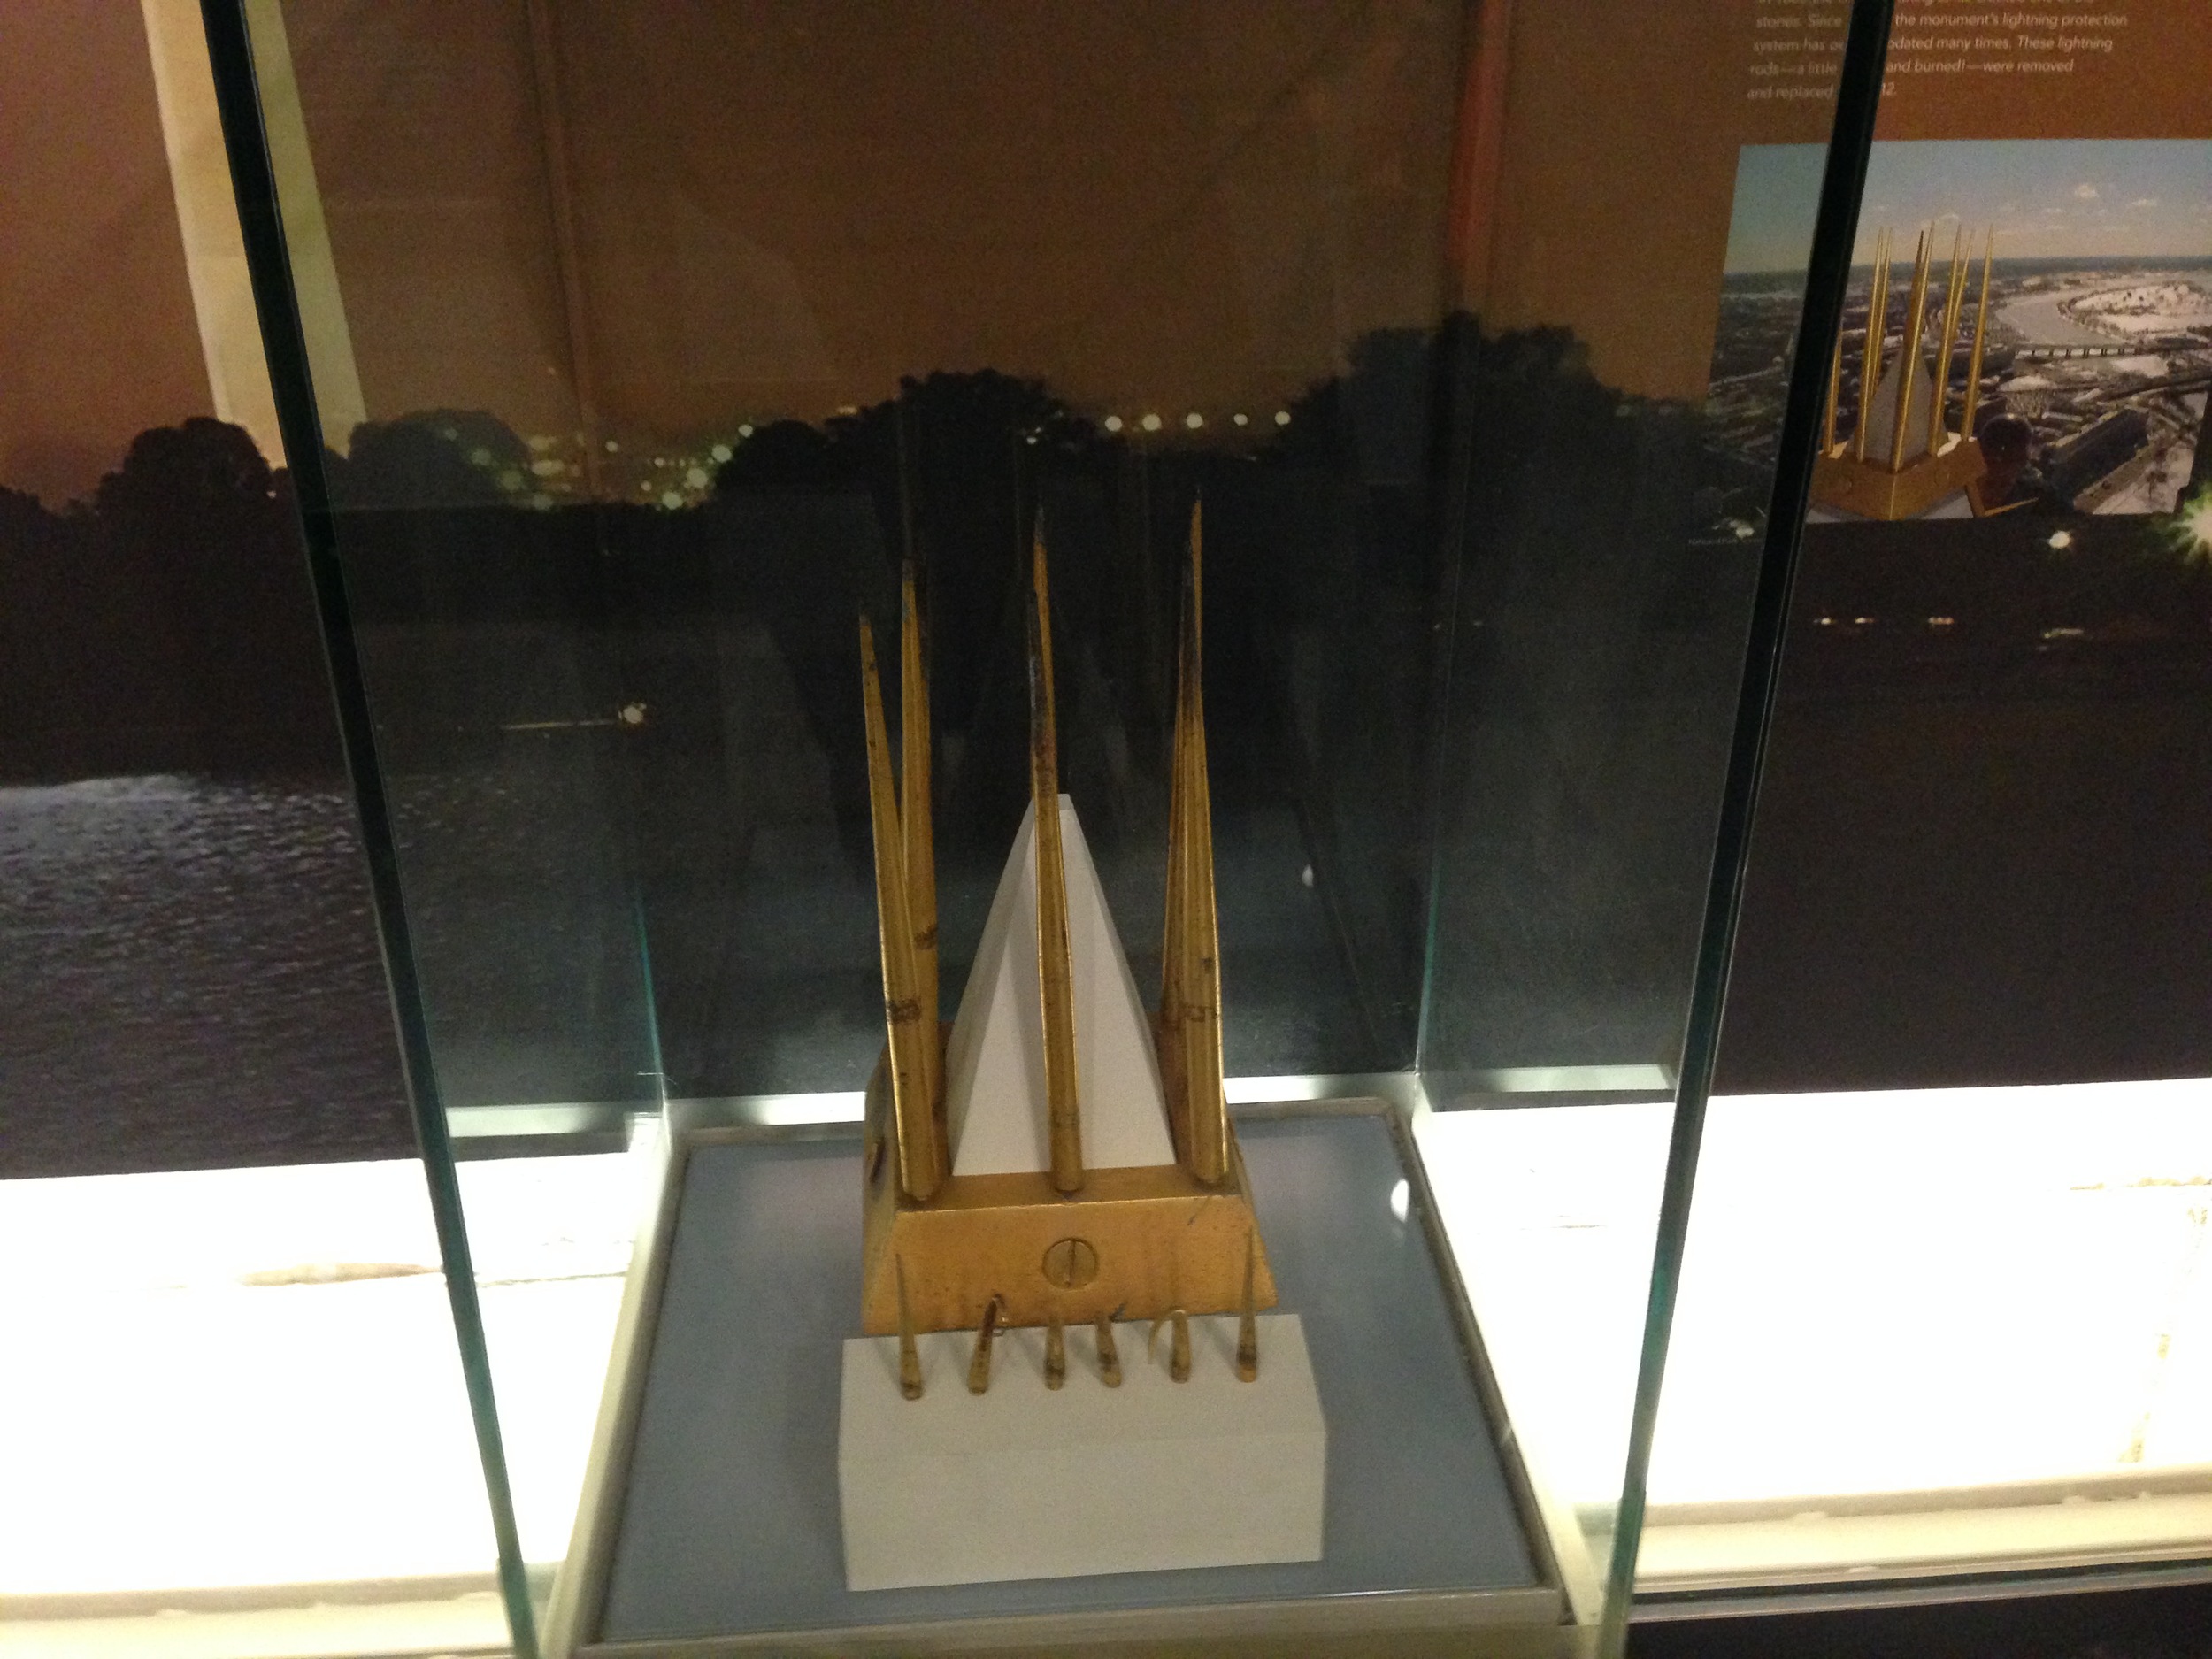 Spent lightning rod display at the Washington Monument.